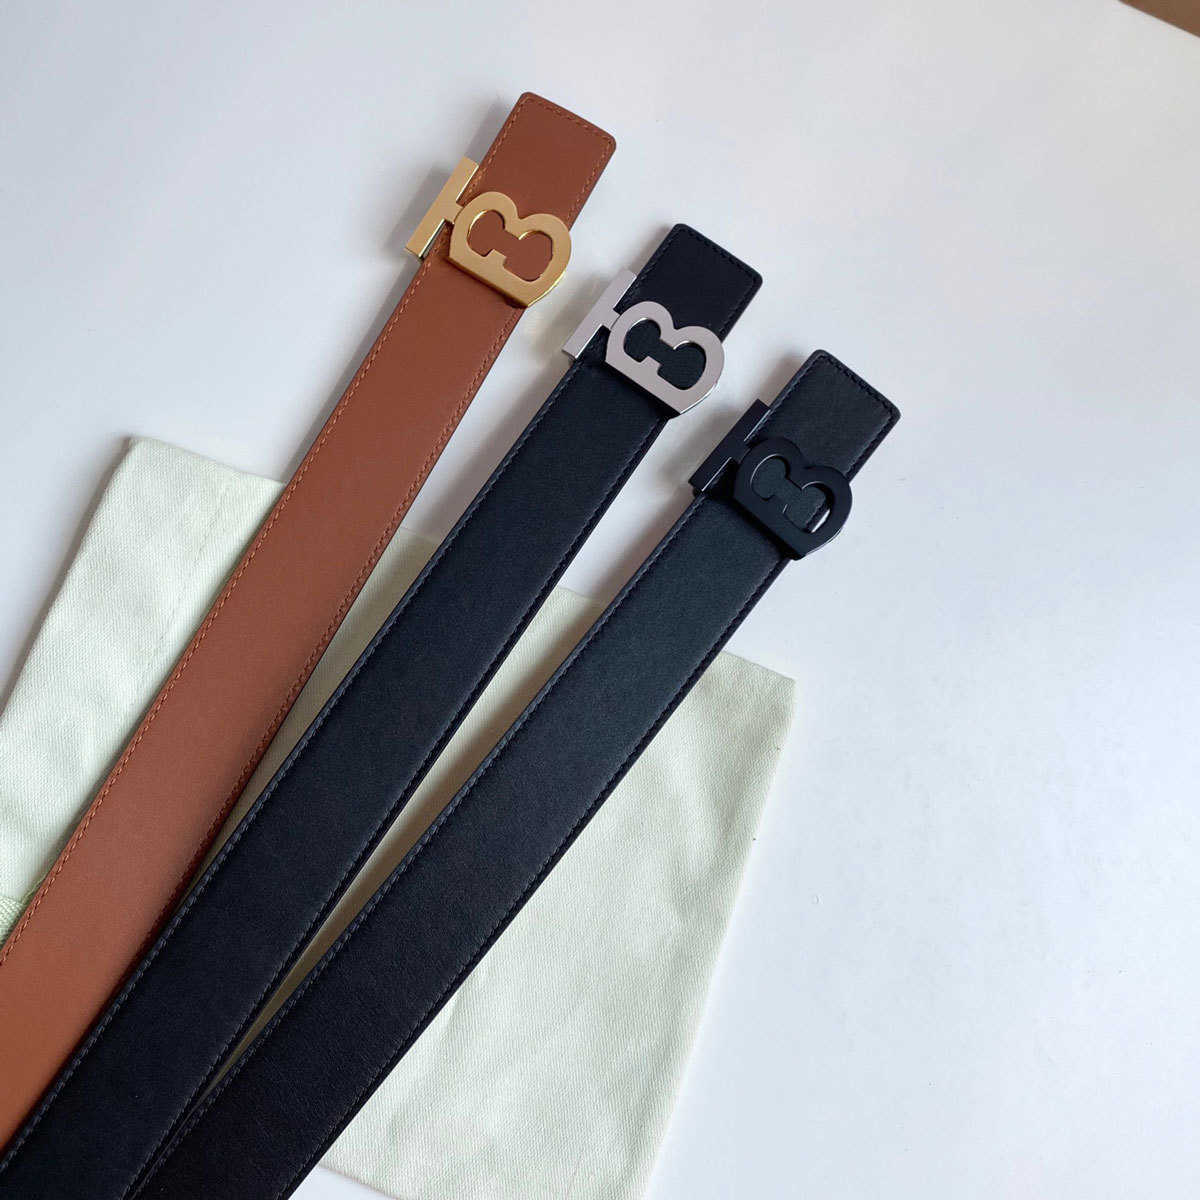 Luxury designer letter buckle belts fashion brand belt men women formal jeans dress belt cow leather waistband various styles widt228h